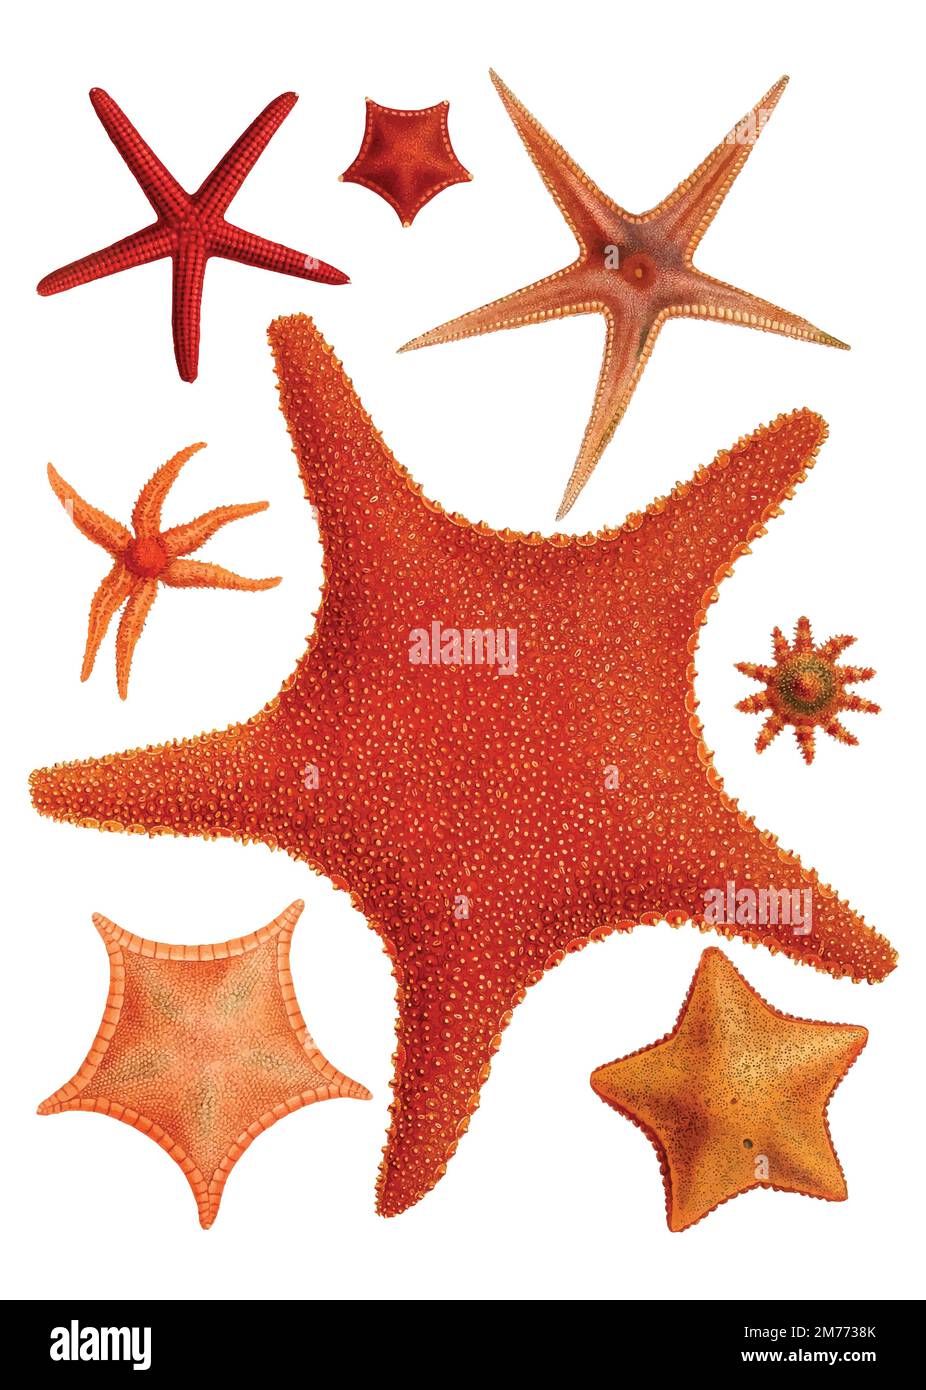 Starfish varieties set illustration Stock Vector